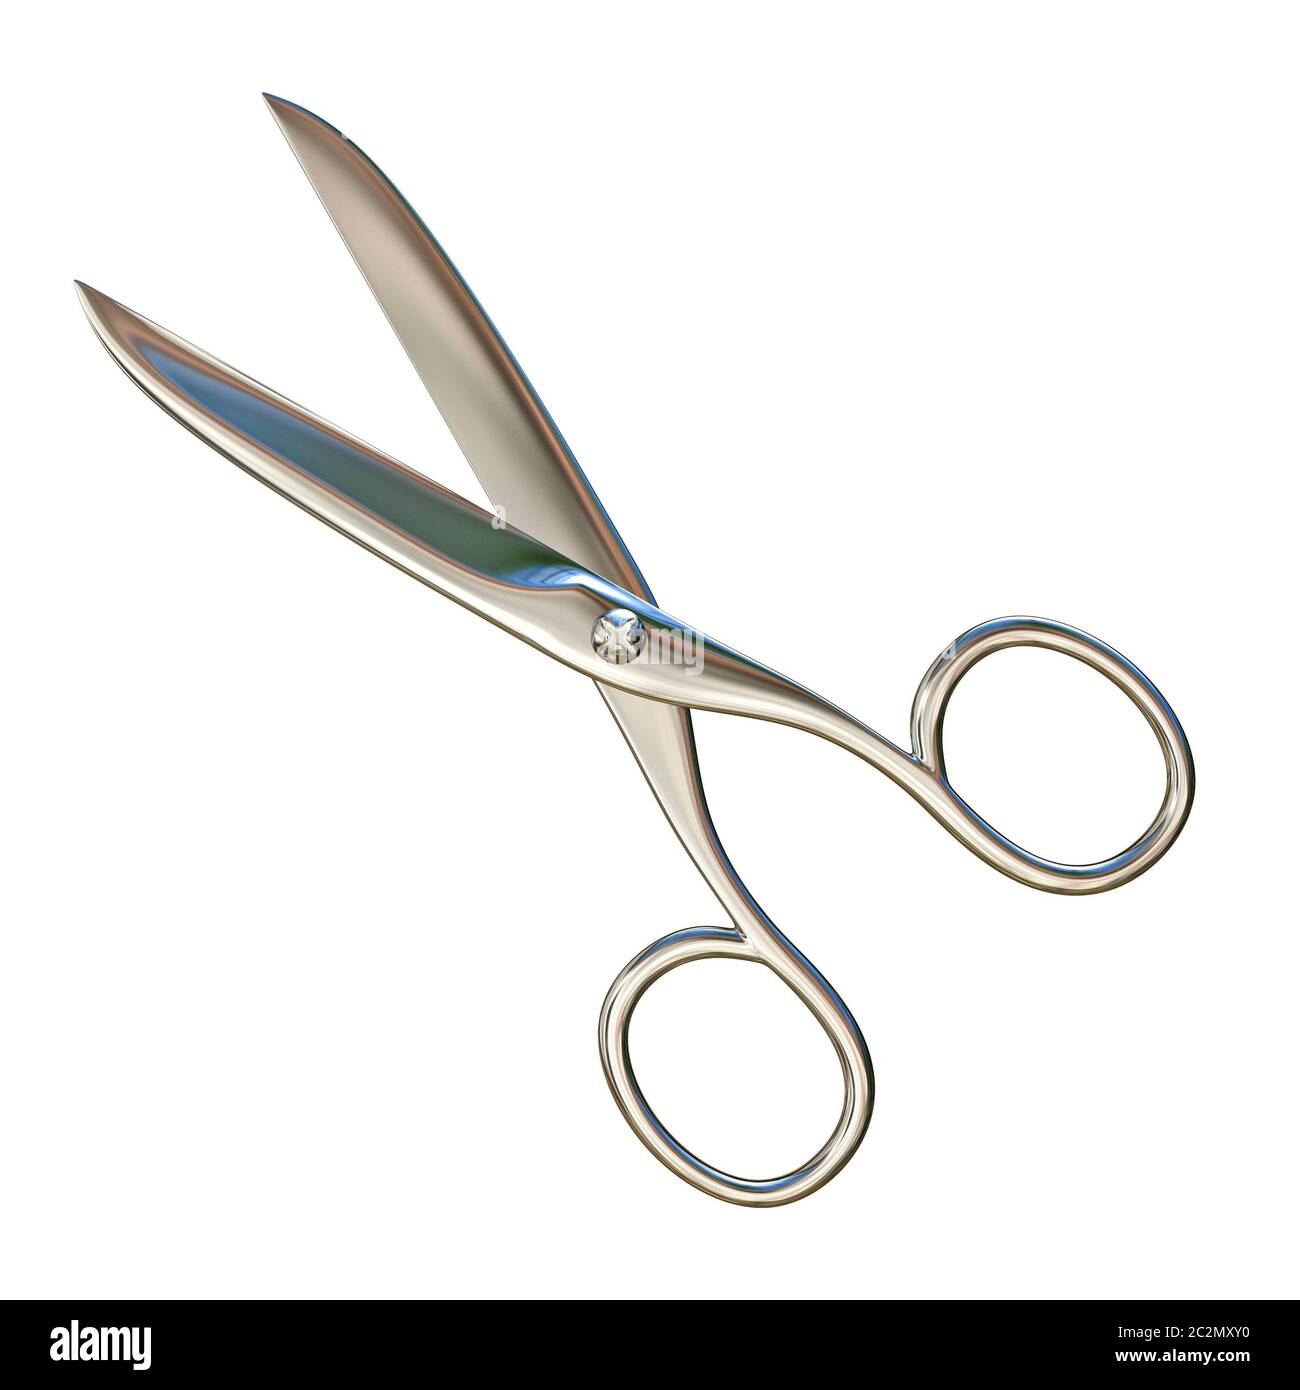 Metal scissors 3D render illustration isolated on white background Stock Photo